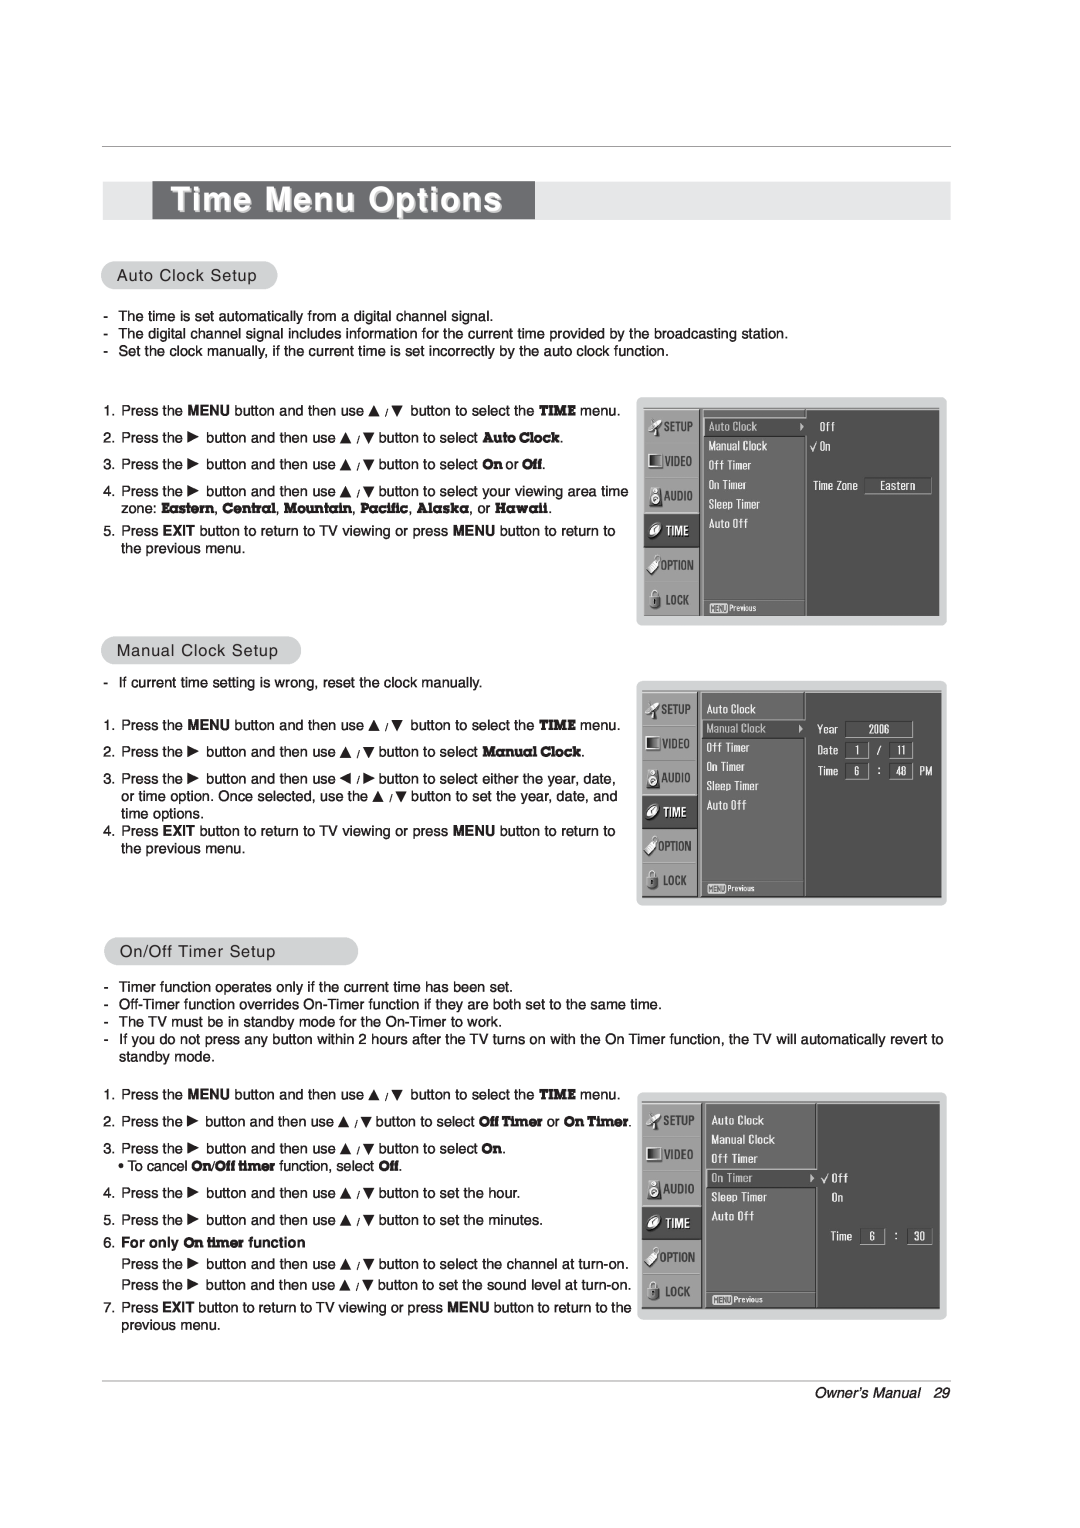 LG Electronics 42PX7DC Time Menu Options, Auto Clock Setup, Manual Clock Setup, On/Off Timer Setup, Owner’s Manual 